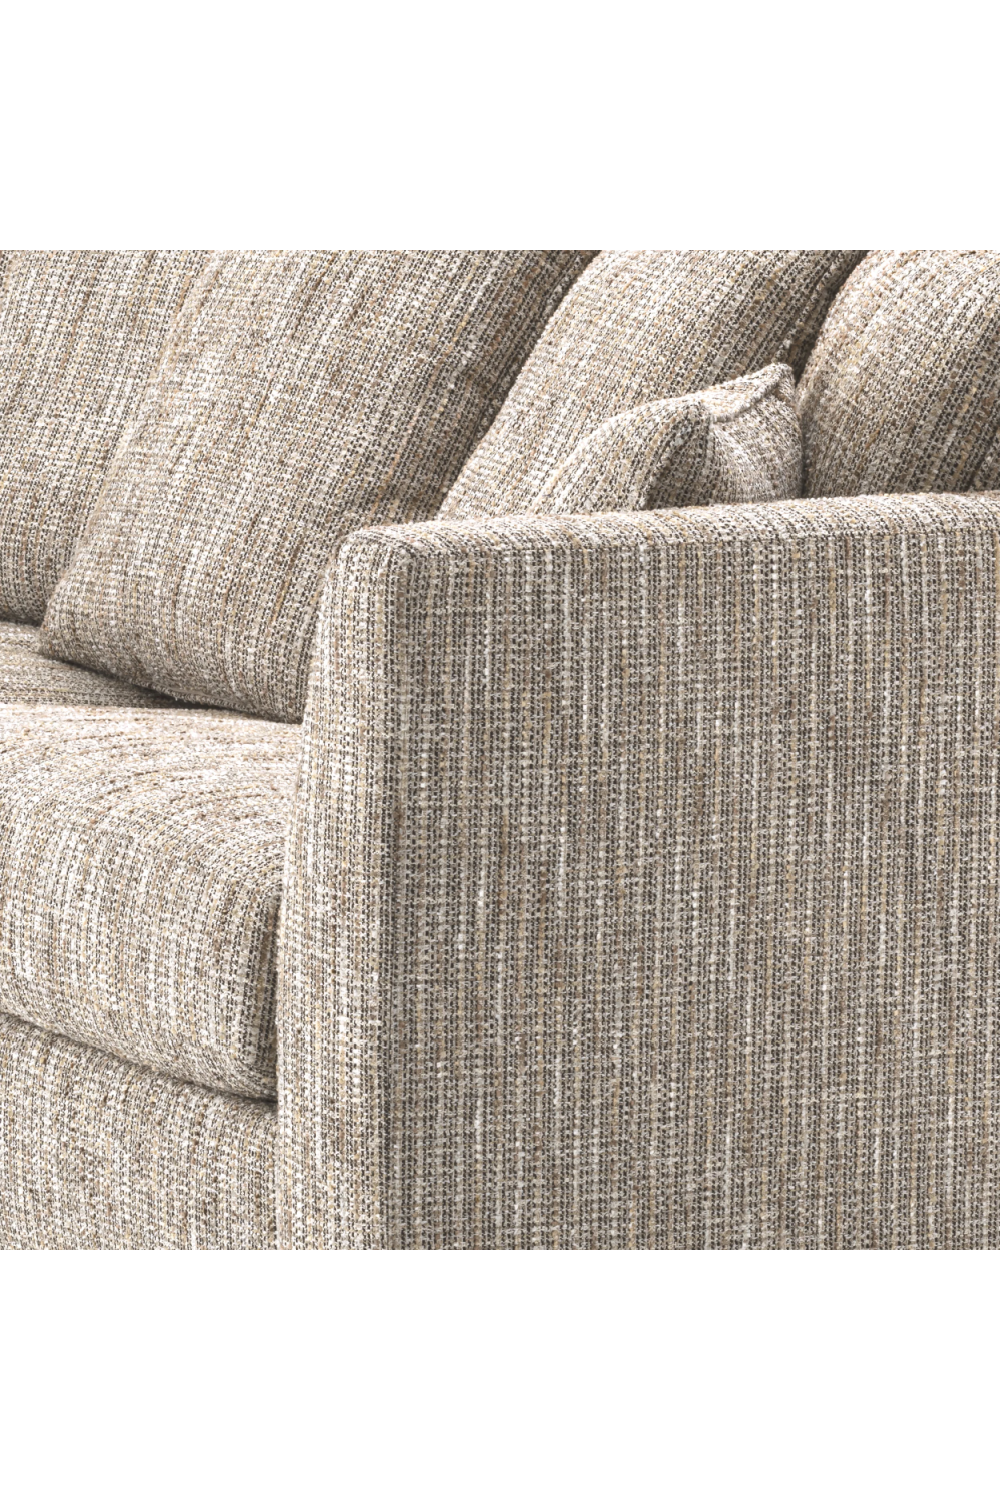 Beige Modern Sofa With Cushions | Eichholtz Taylor | Oroa.com